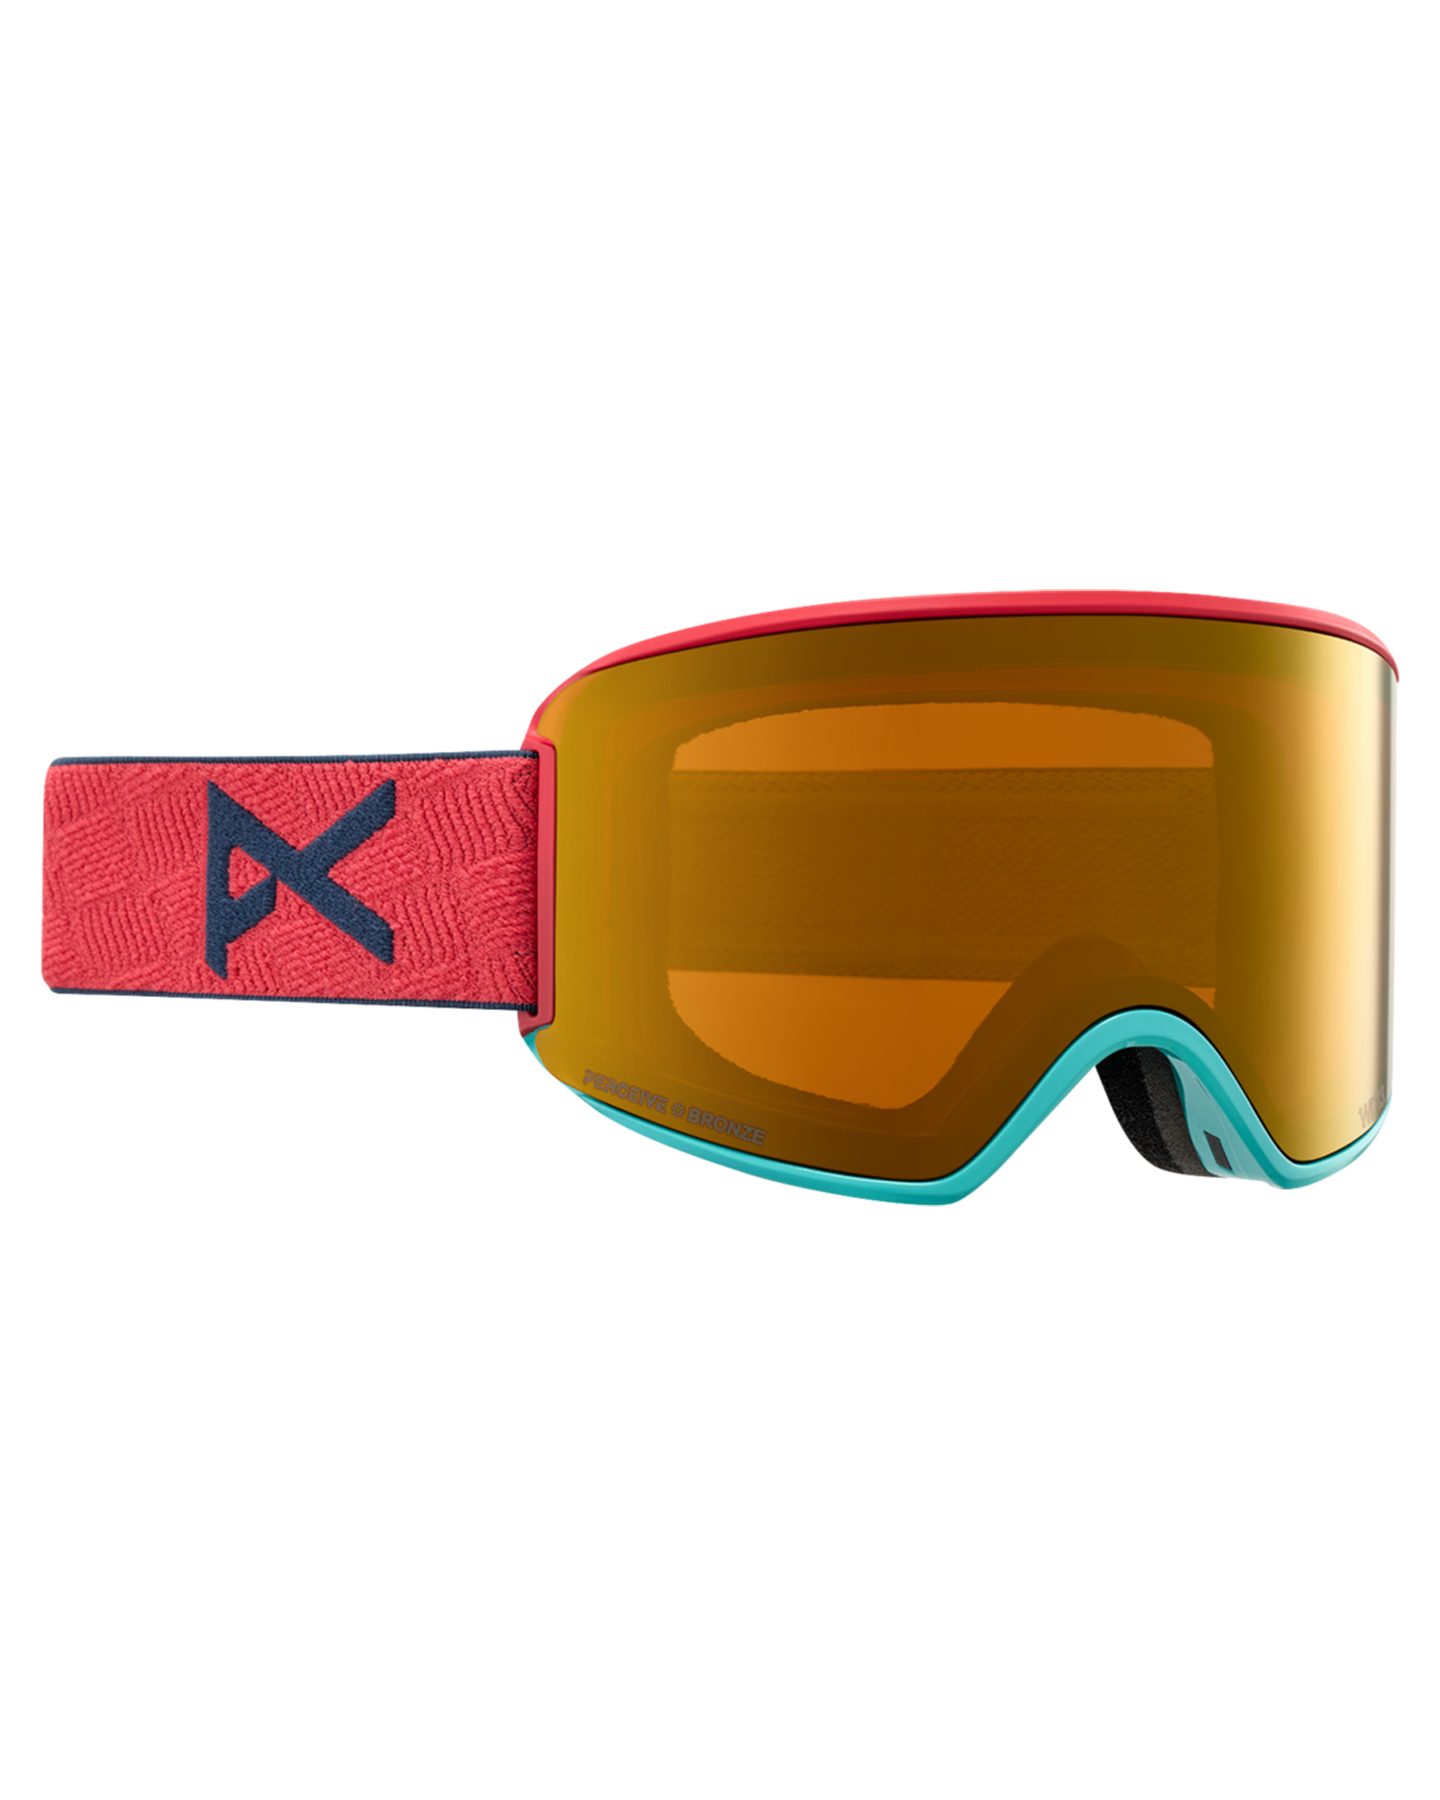 Anon WM3 Low Bridge Fit Snow Goggles + Bonus Lens + MFI - Coral / Perceive Sunny Bronze Women's Snow Goggles - Trojan Wake Ski Snow